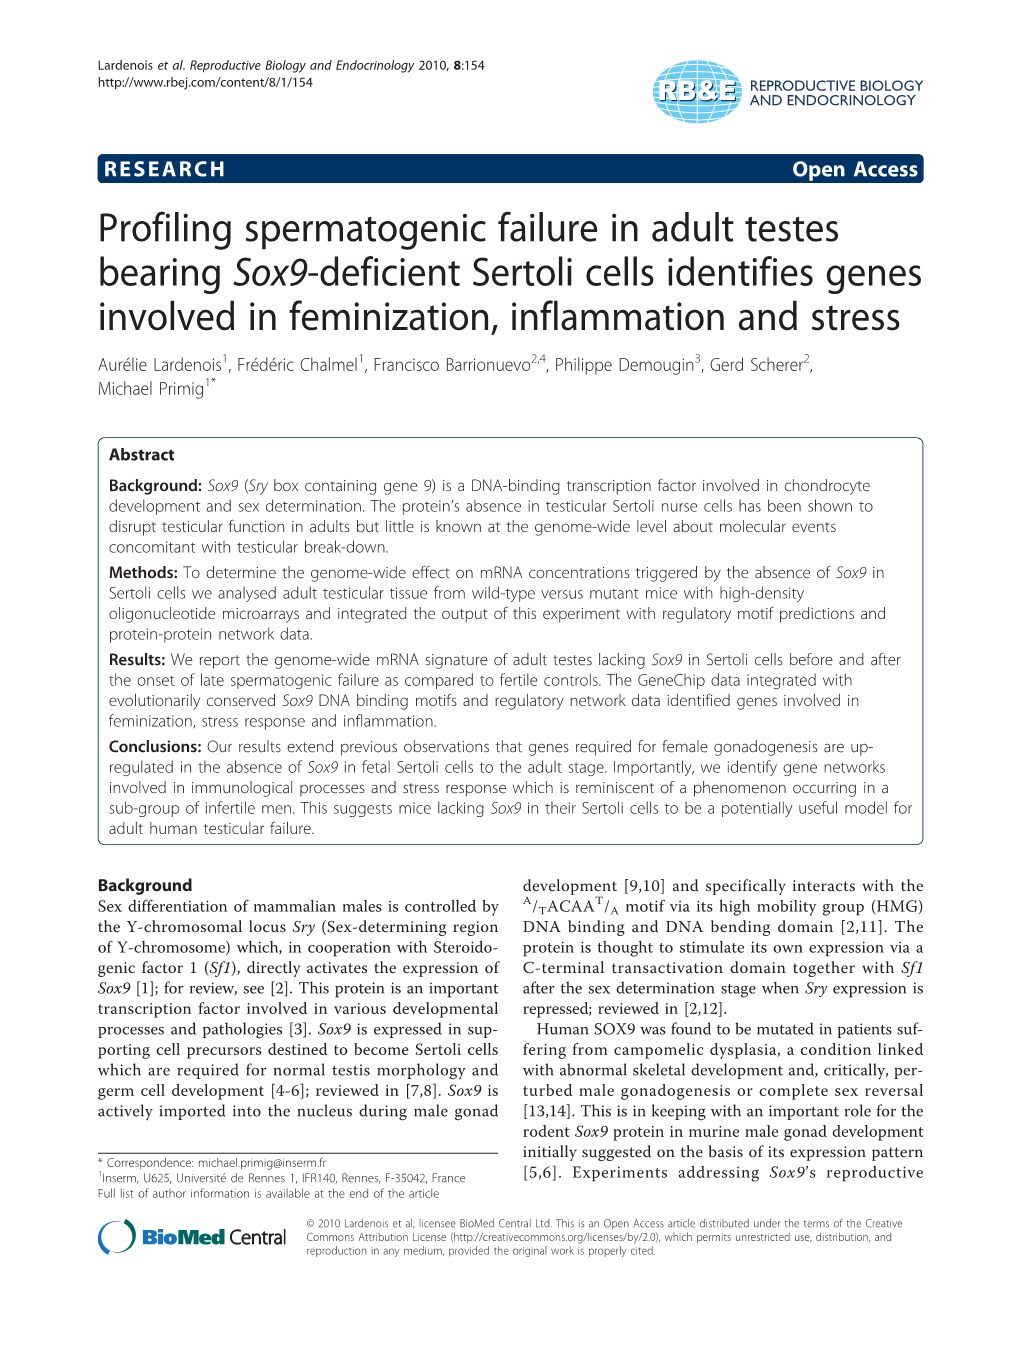 Profiling Spermatogenic Failure in Adult Testes Bearing